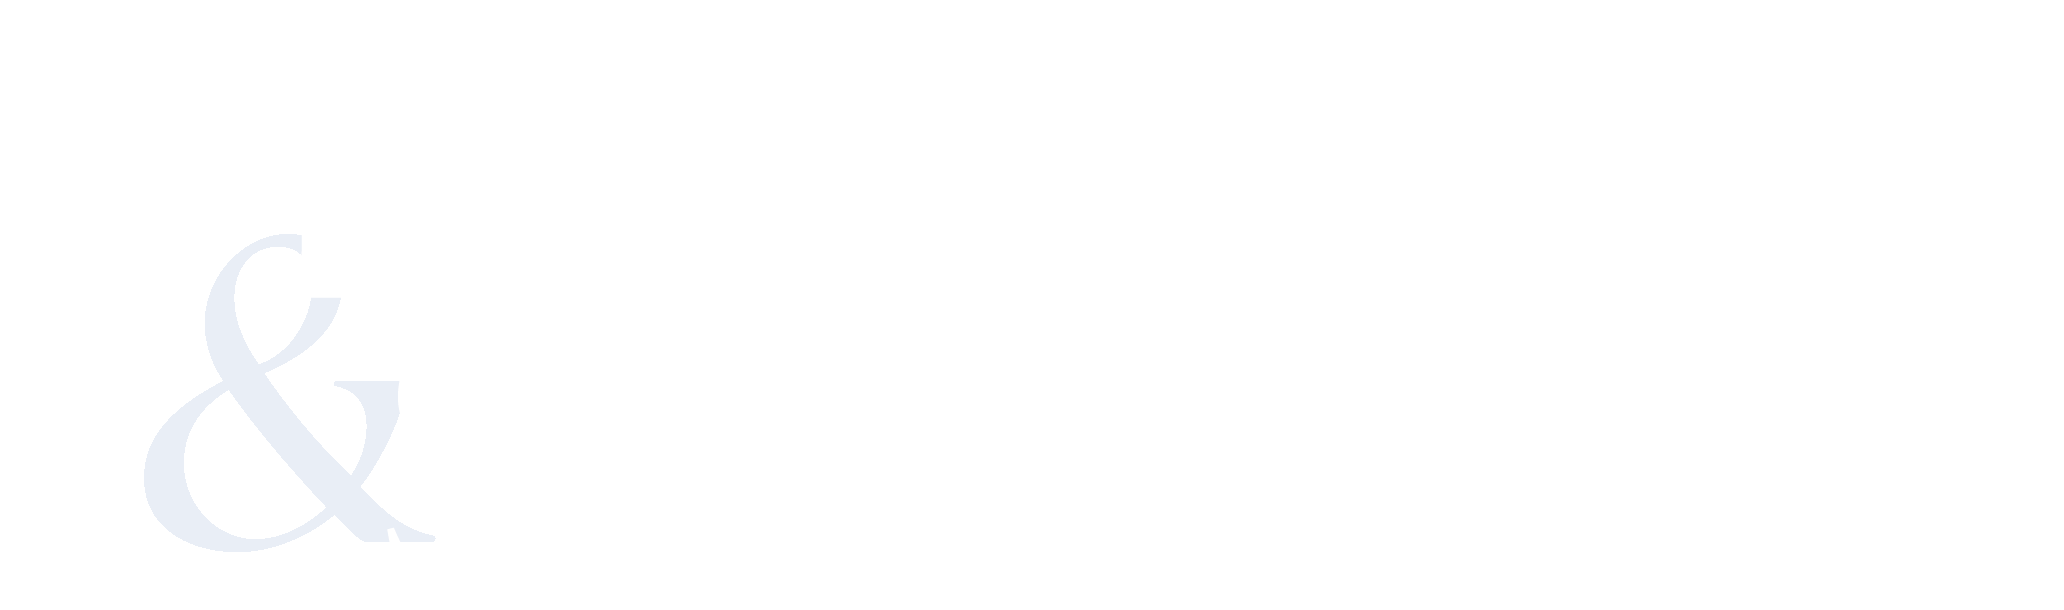 Matlab & Simulink logo